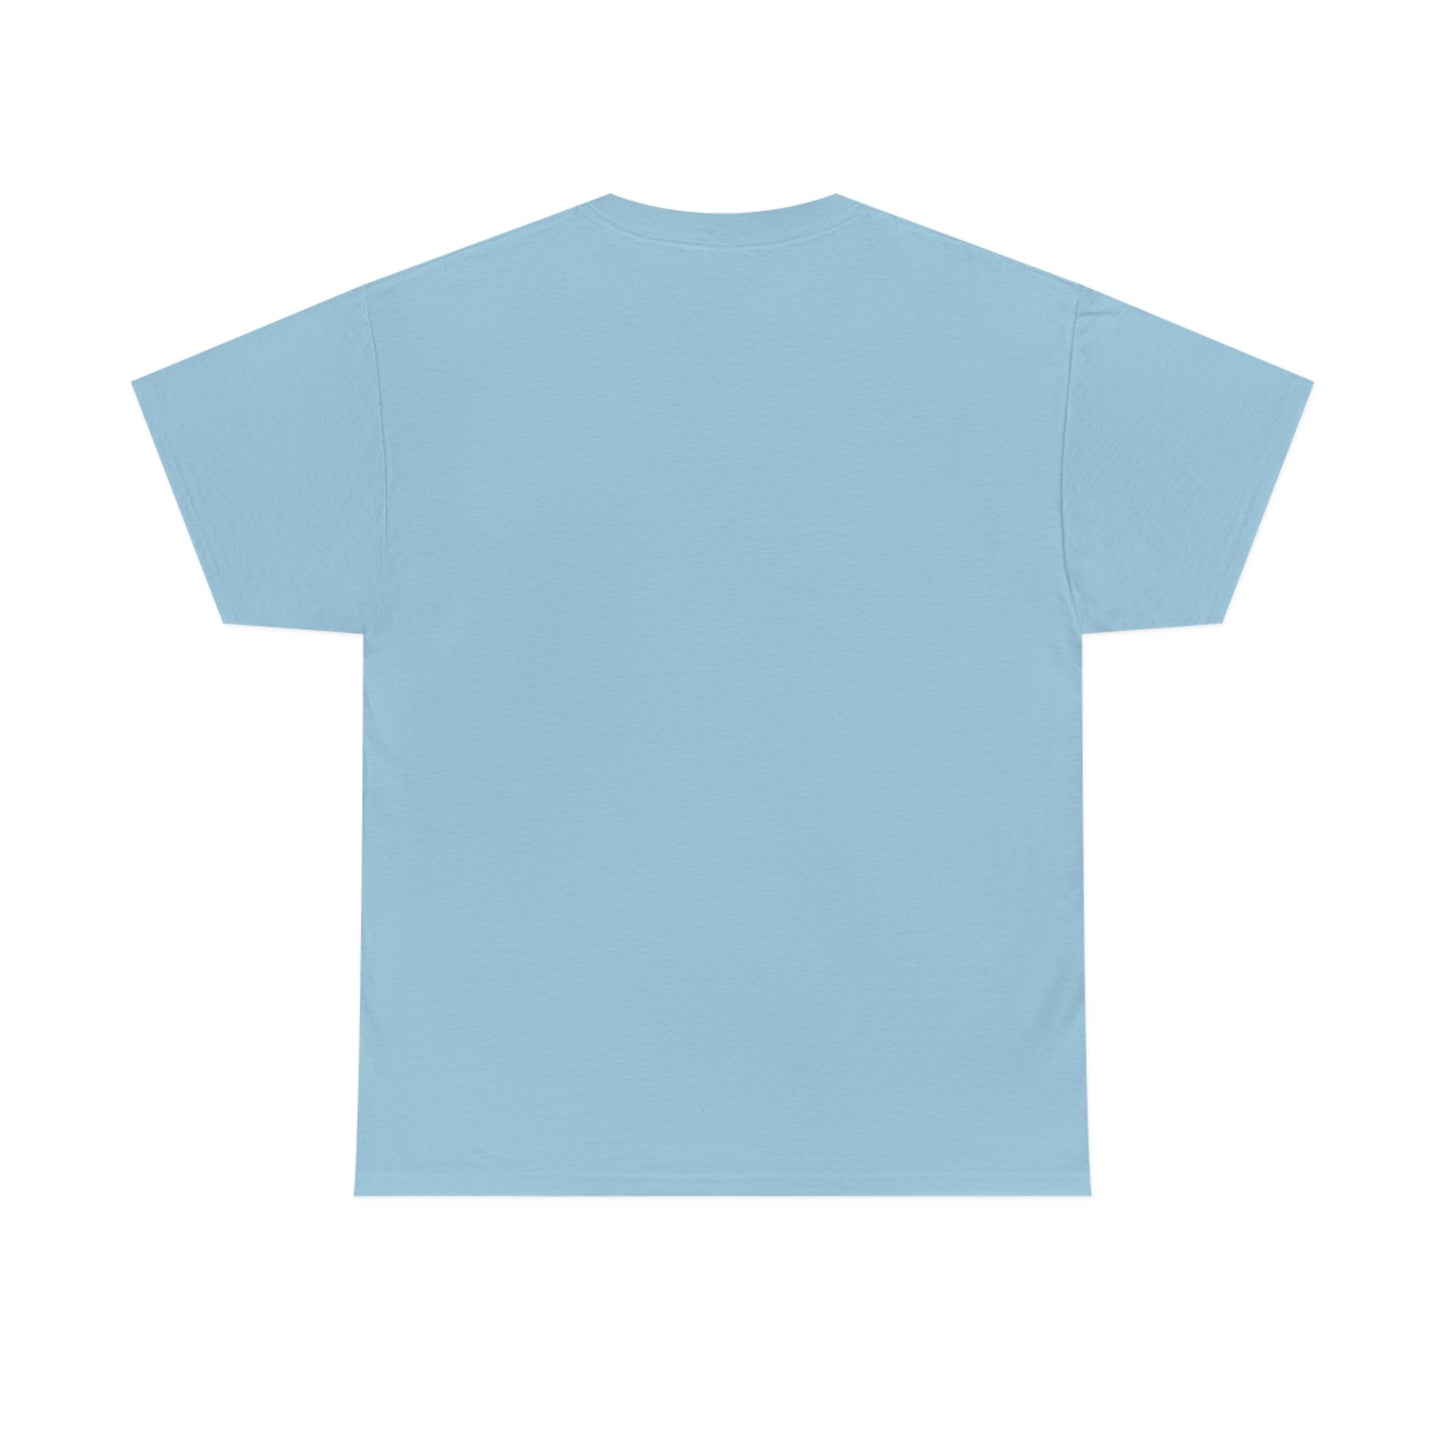 Ren & Stimpy T-Shirt